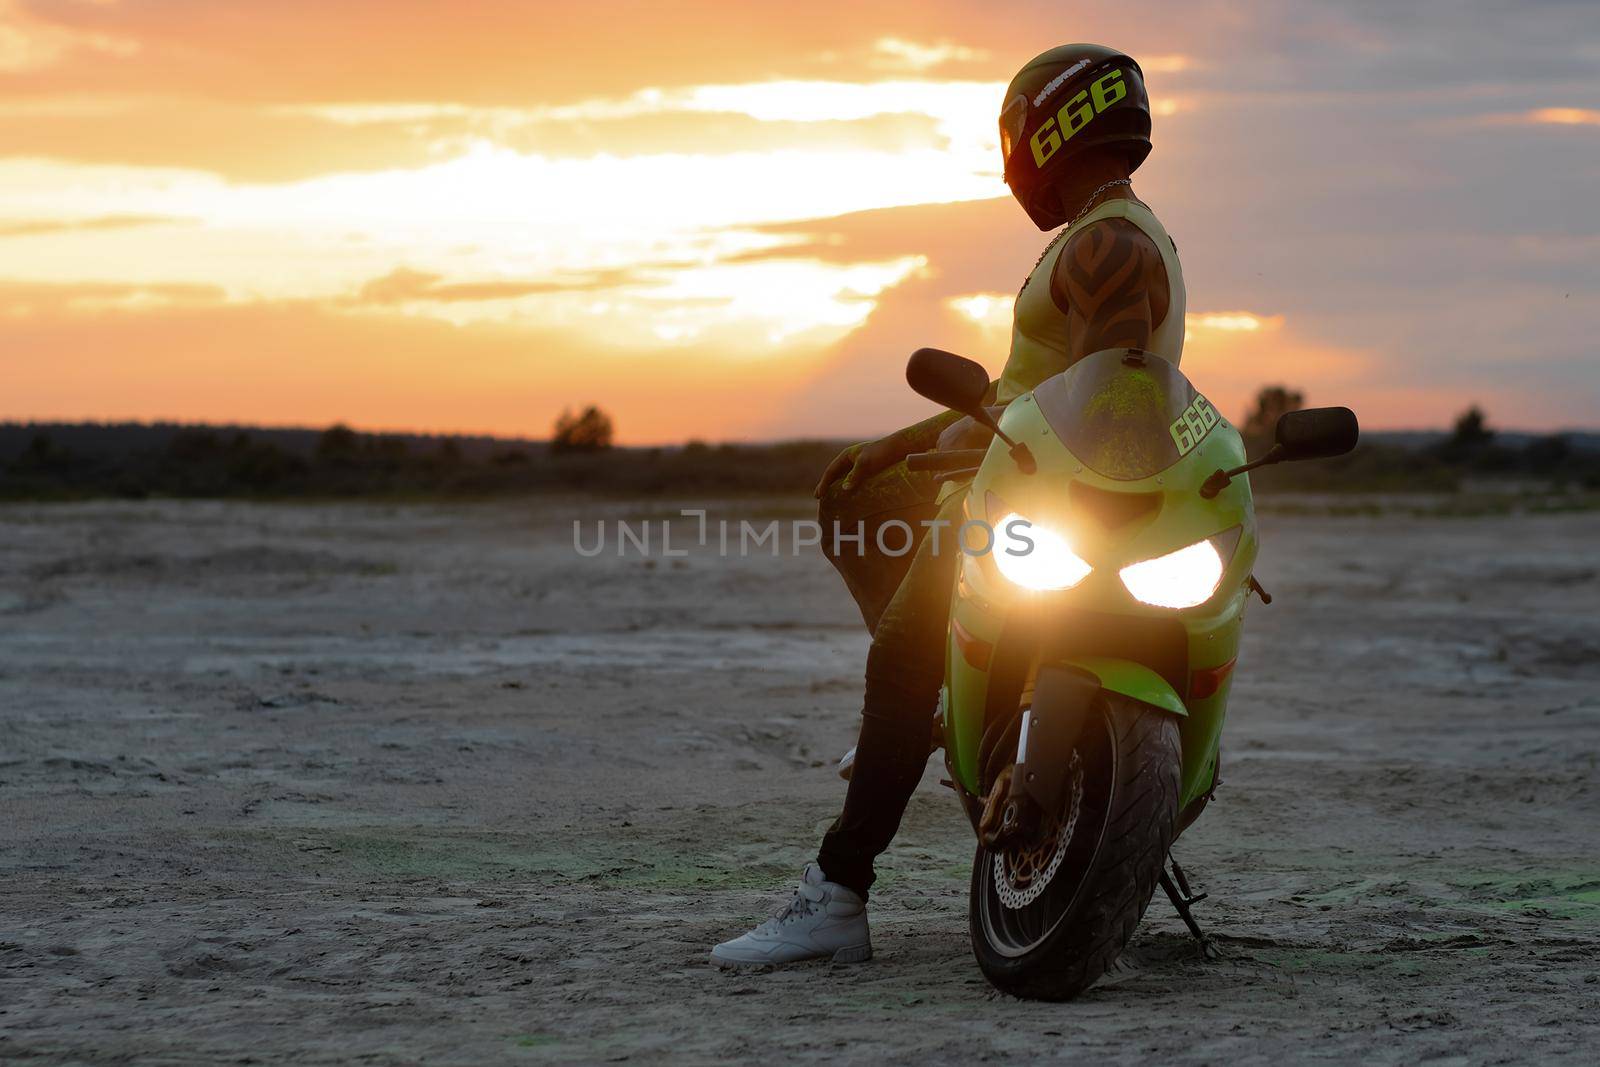 Cool anonymous biker near motorcycle on beach by 3KStudio